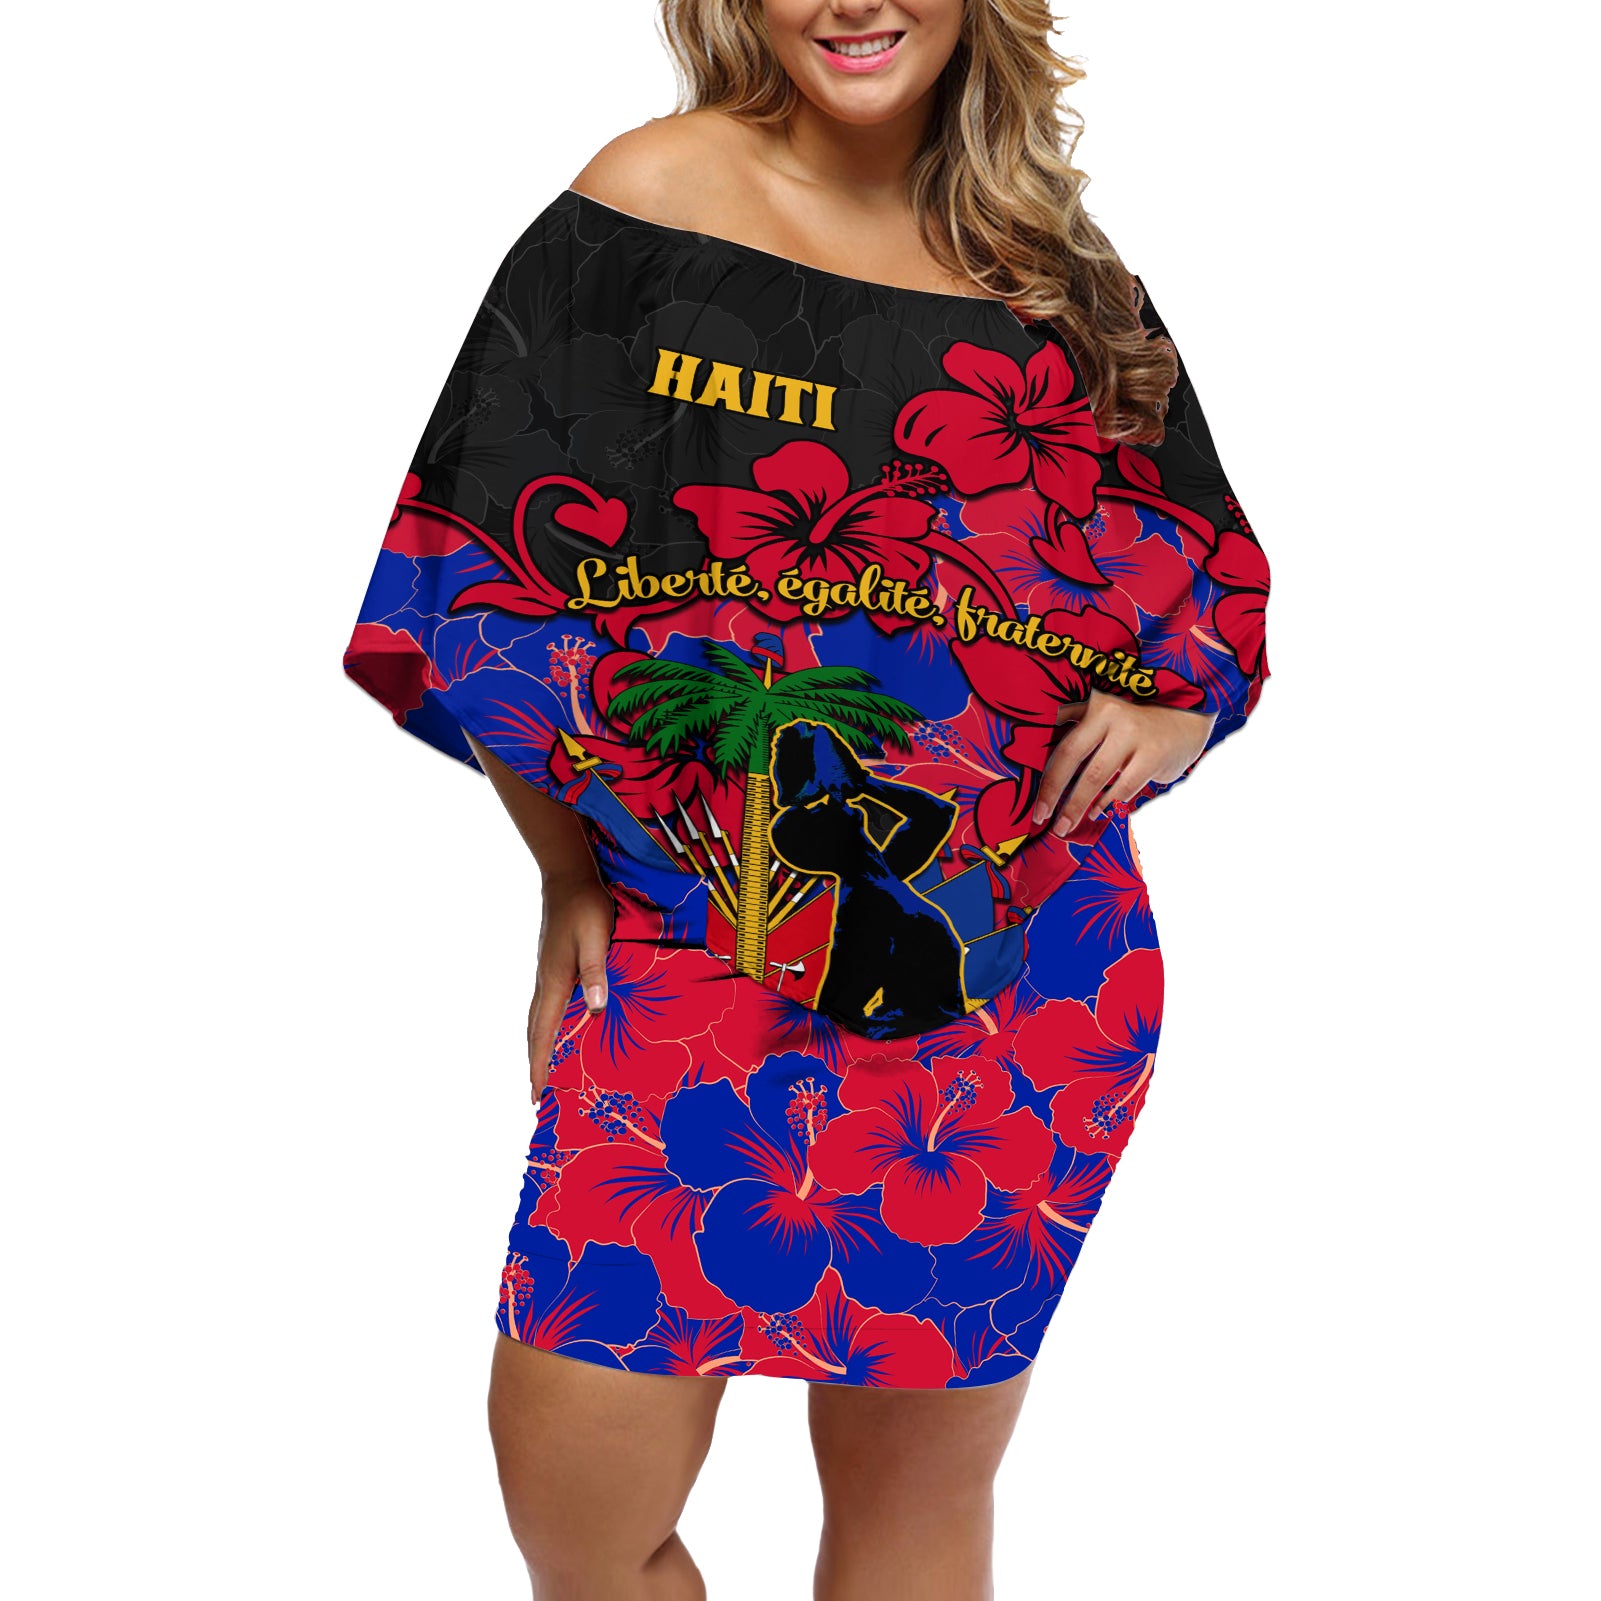 haiti-independence-day-off-shoulder-short-dress-hibiscus-neg-marron